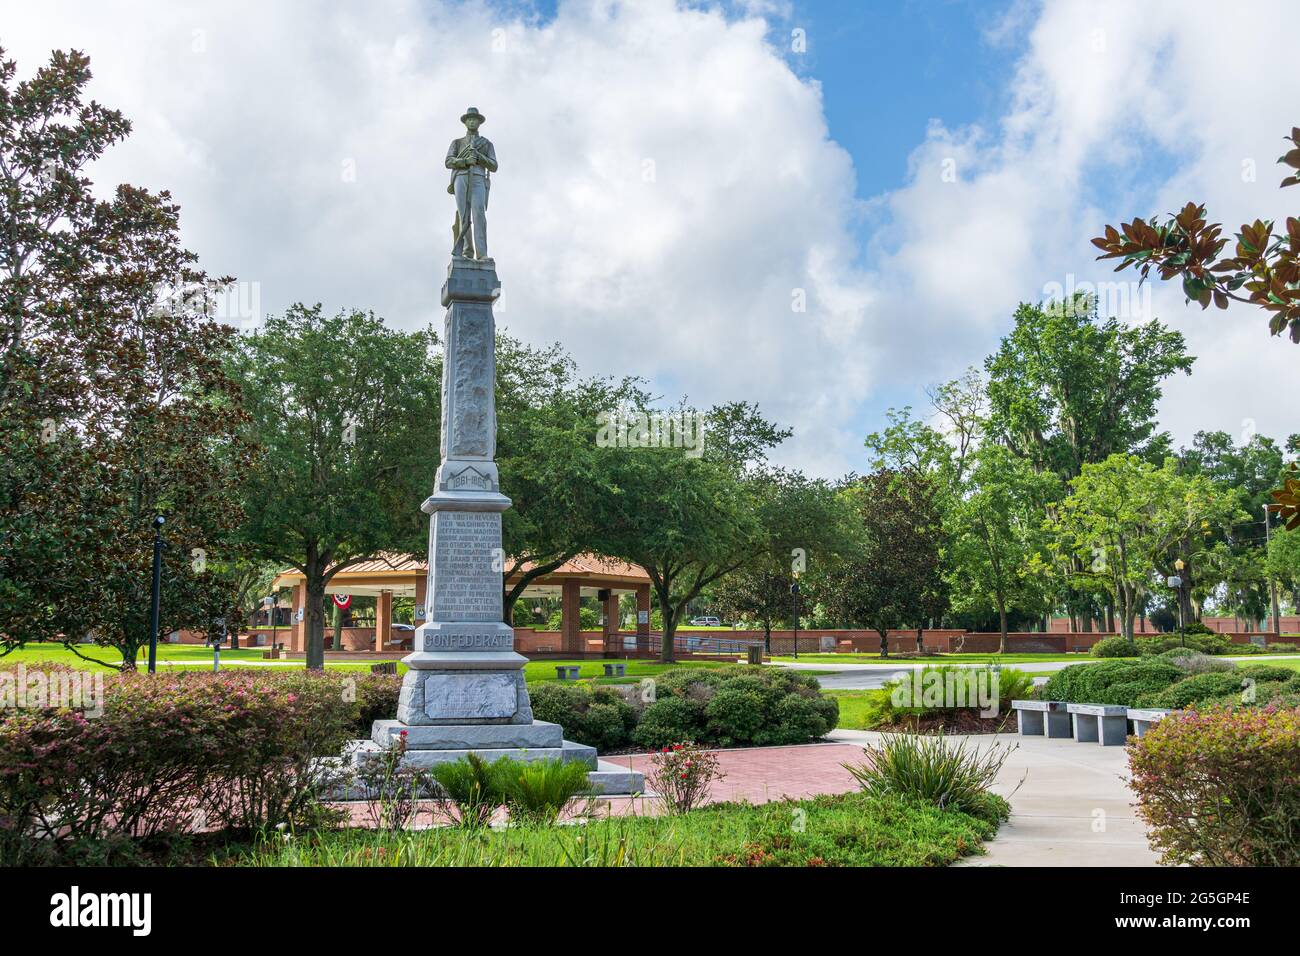 Denkmal für konföderierte Bürgerkriegseinheiten im Ocala Marion County Veteran's Memorial Park - Ocala, Florida, USA Stockfoto